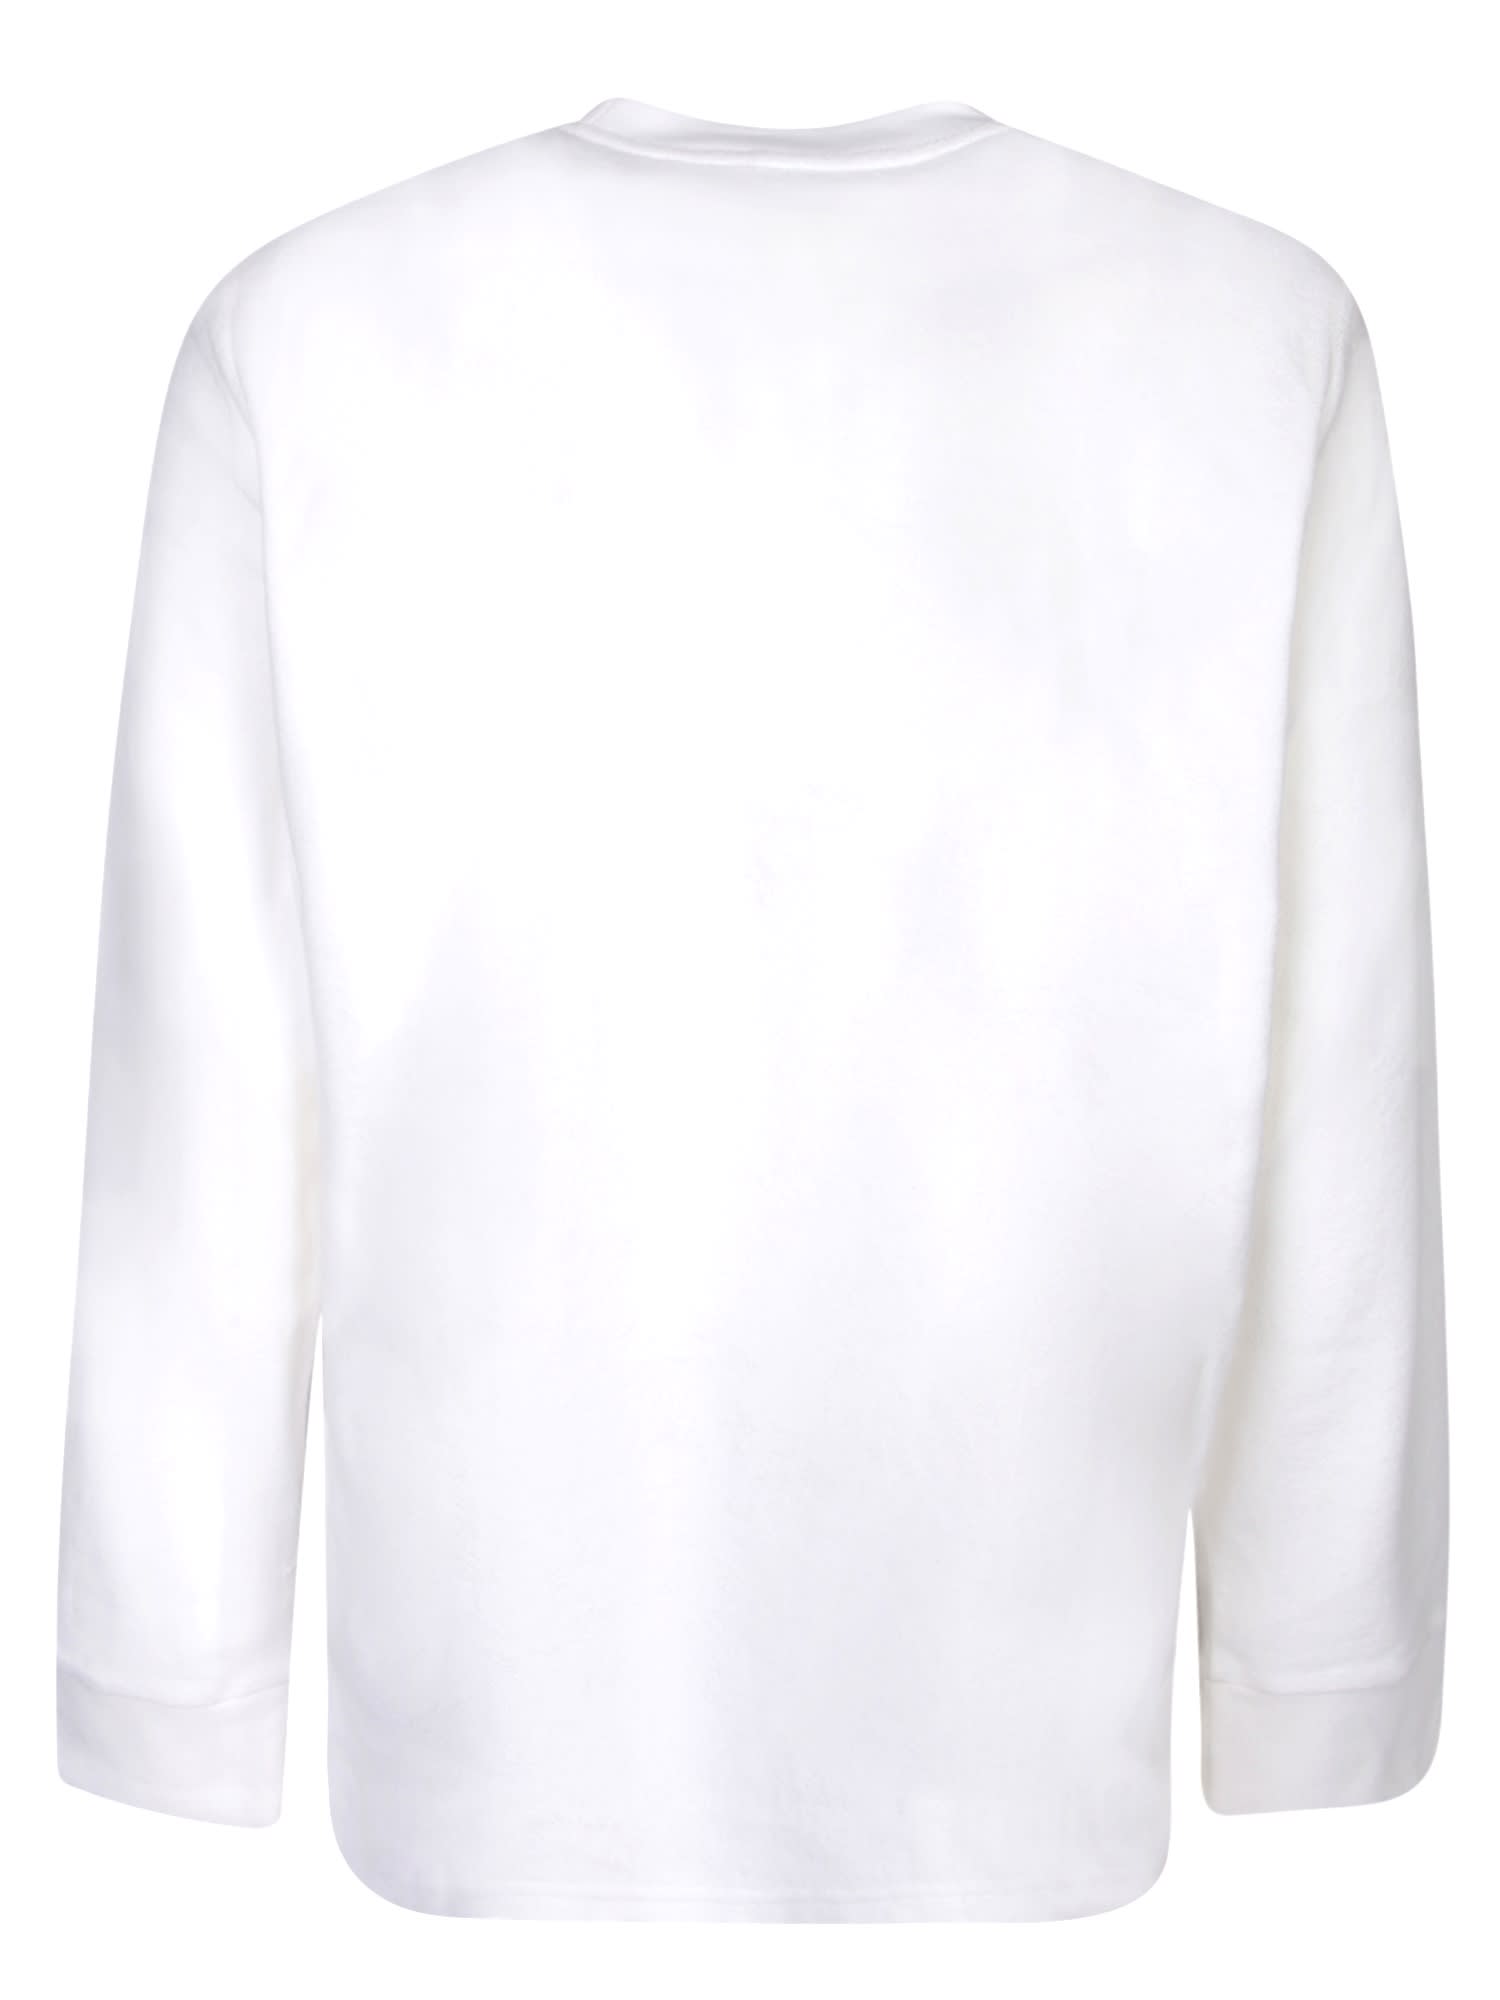 Shop Moncler Logo University White Sweatshirt